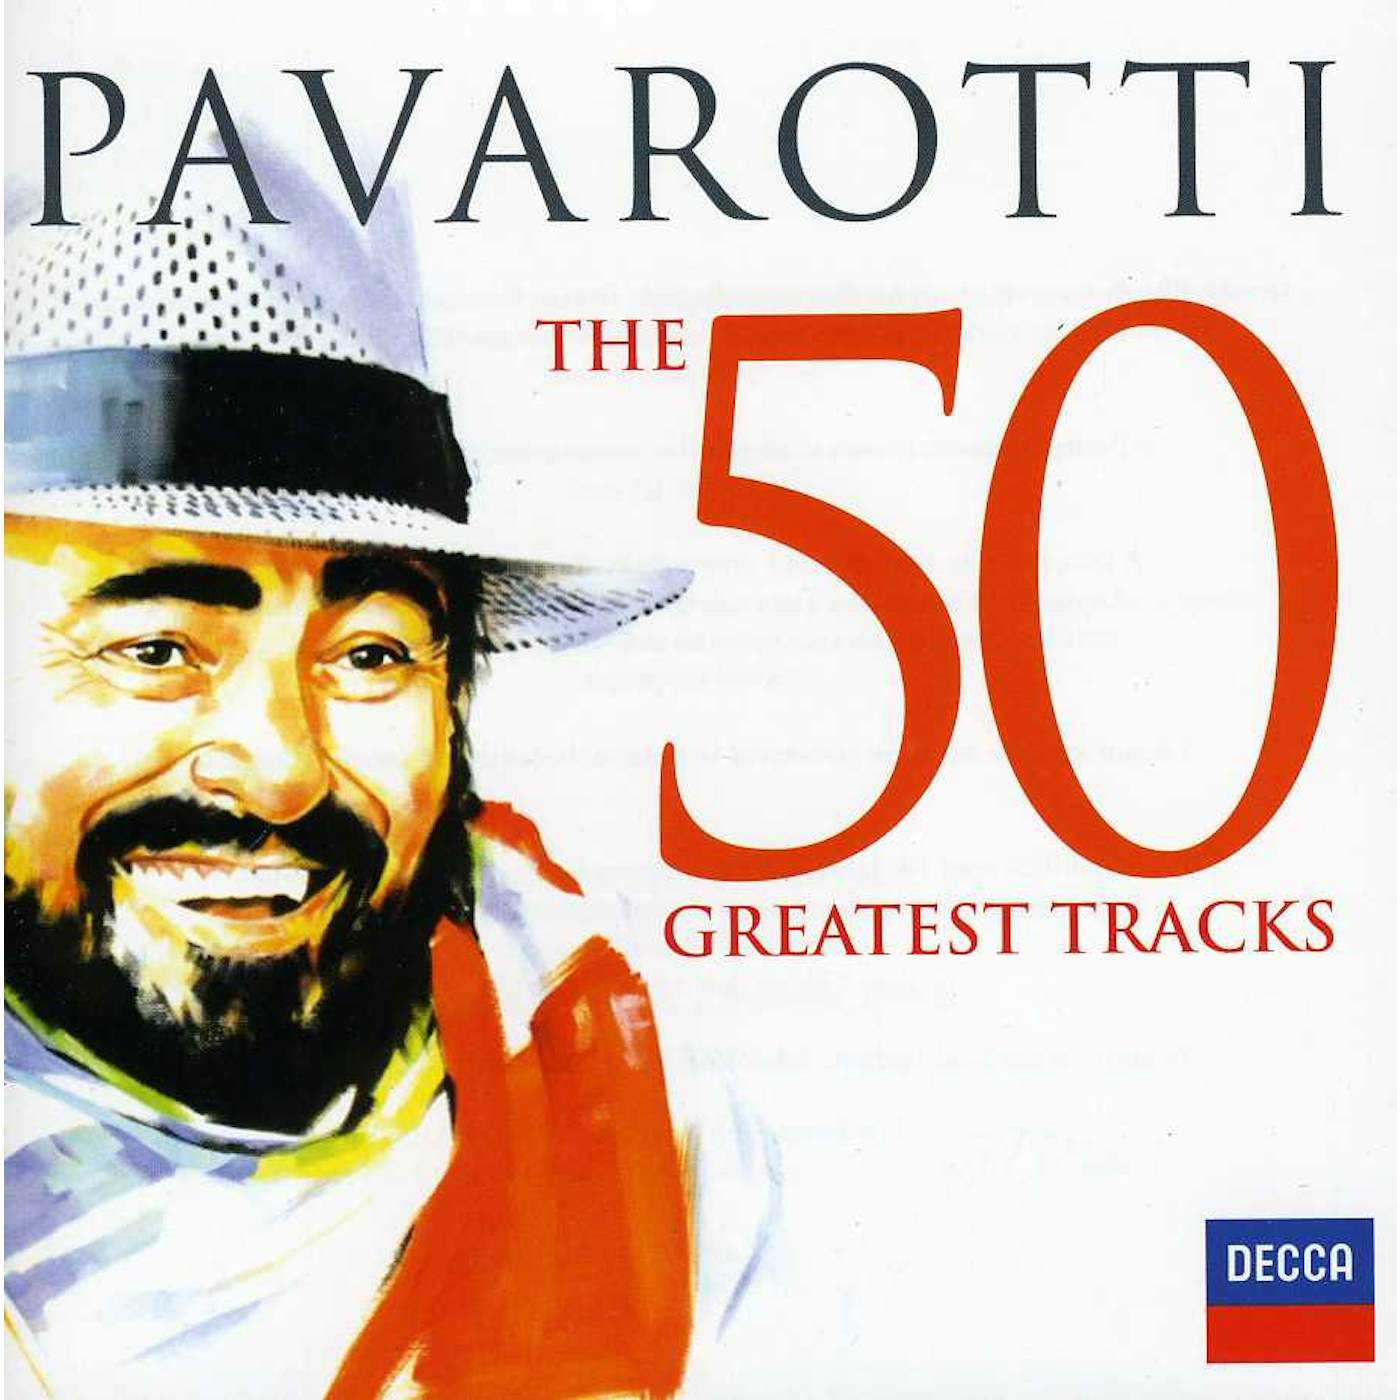 Luciano Pavarotti 50 GREATEST TRACKS CD